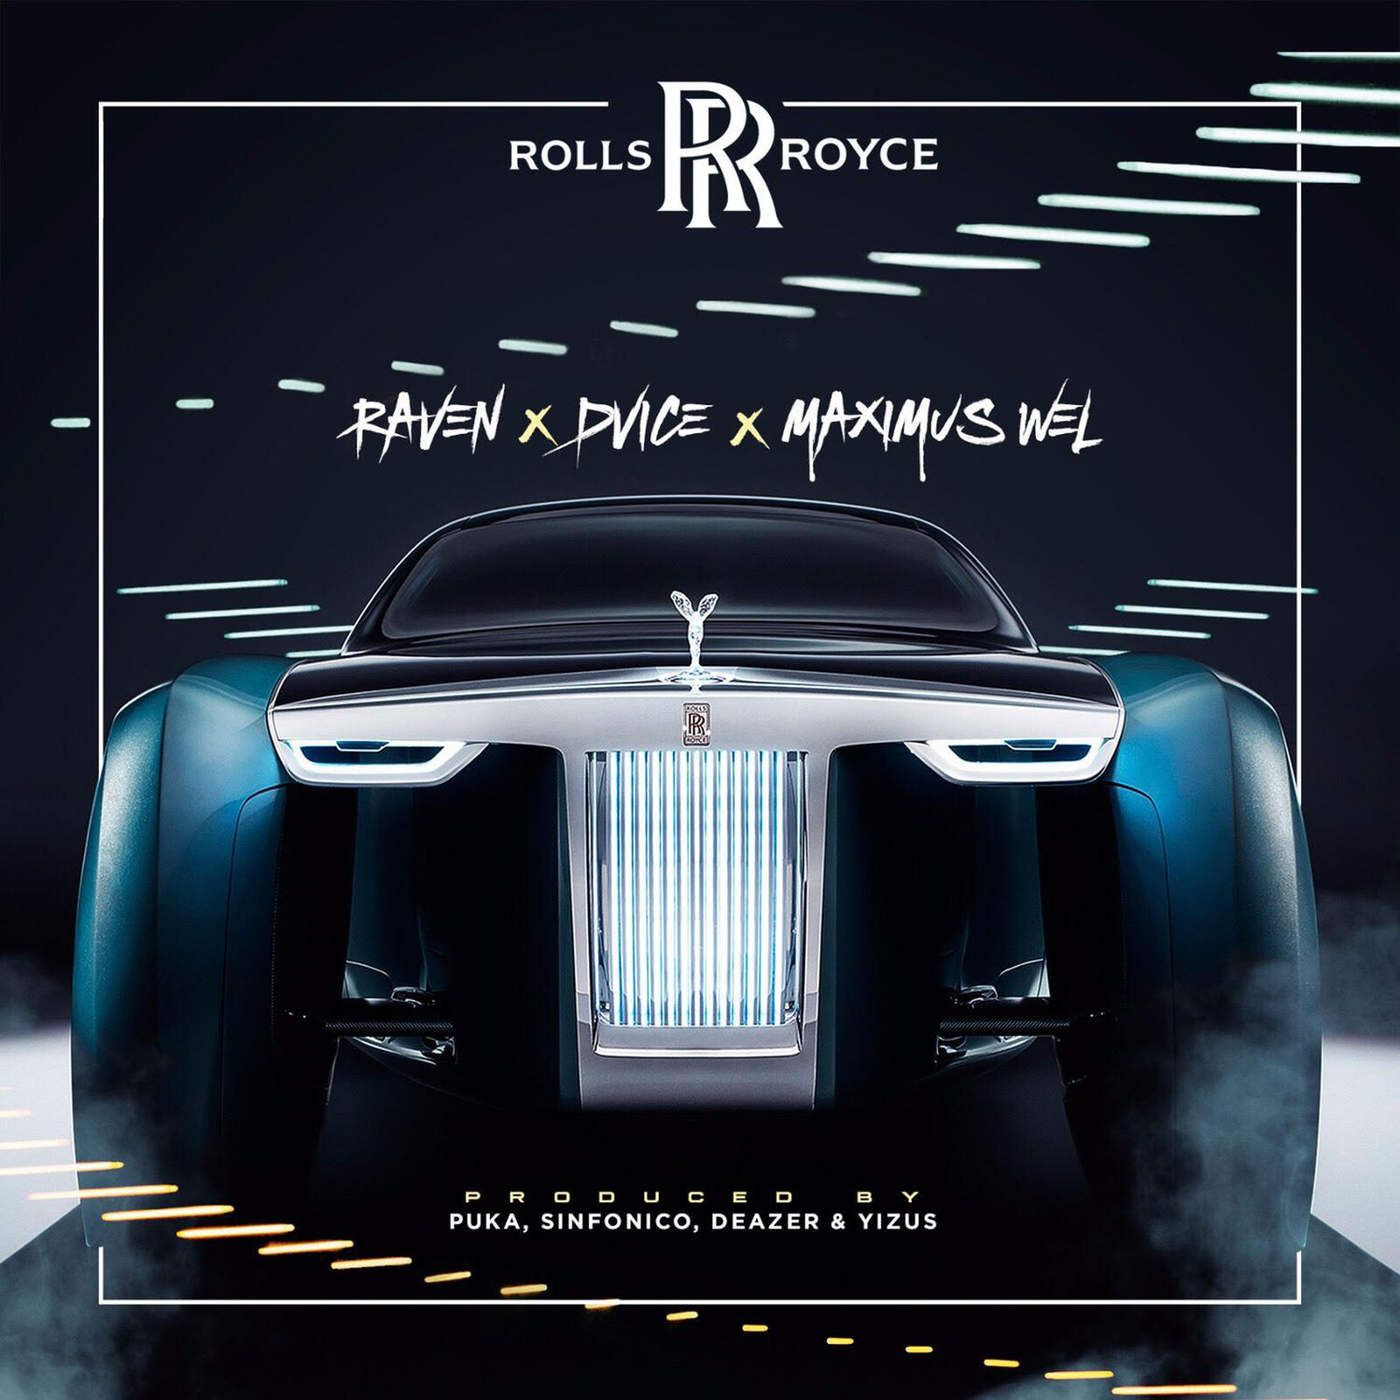 Rolling трек. Роллс Ройс обложка. Обложки с Роллс Ройсом для трека. Обложки треков с машинами. Rolls Royce на обложка.